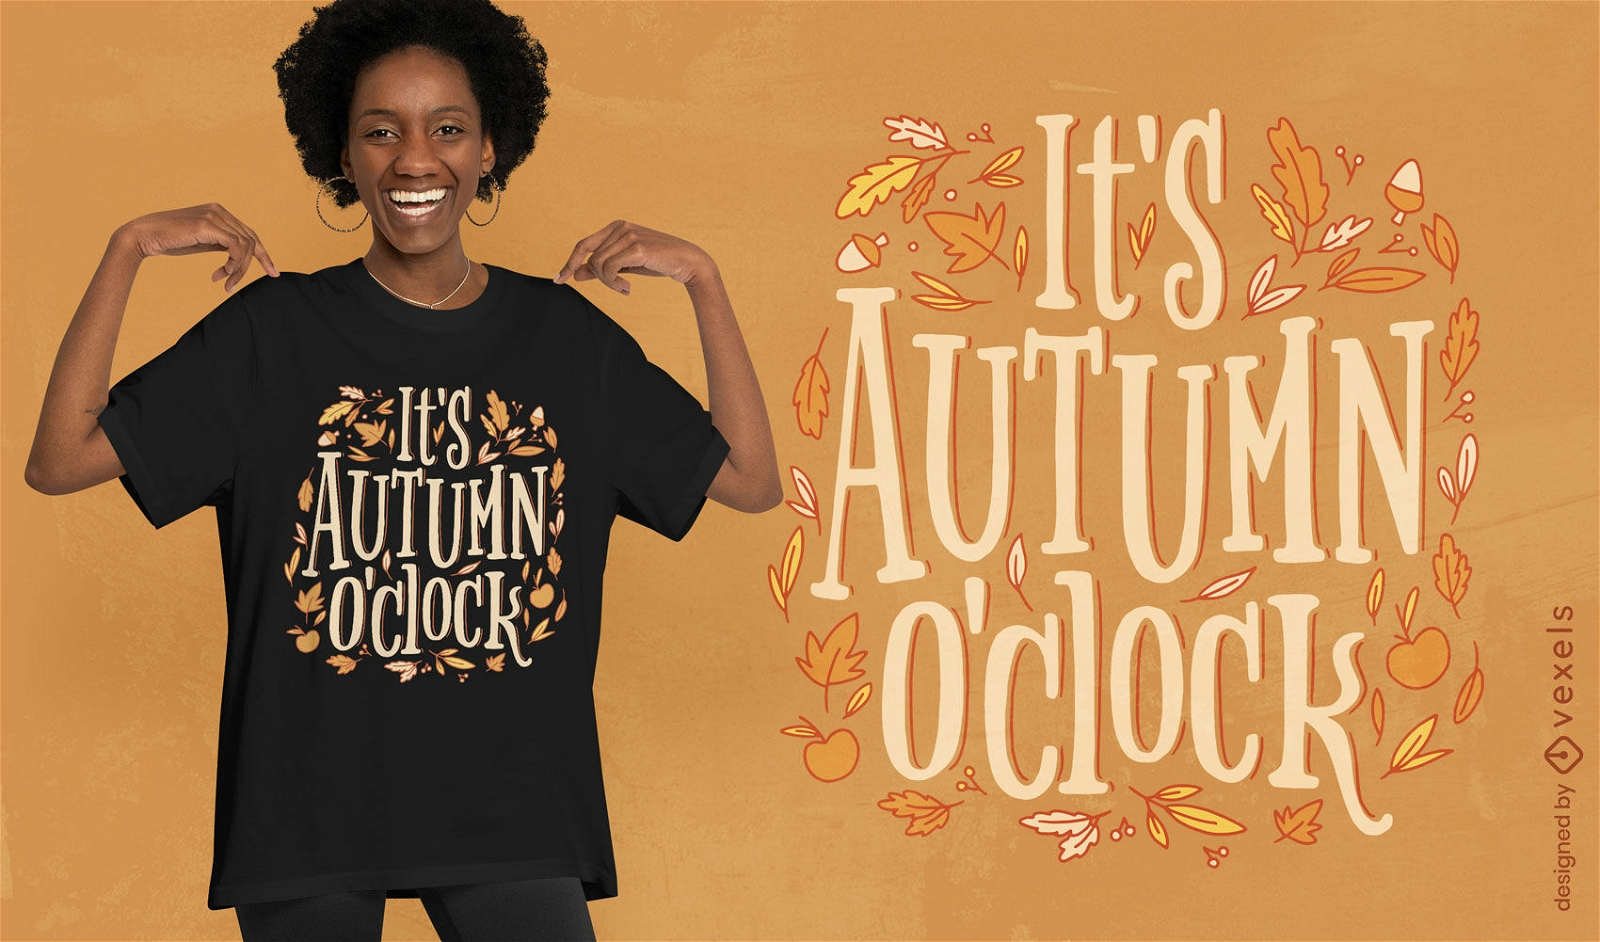 Autumn season lettering t-shirt design